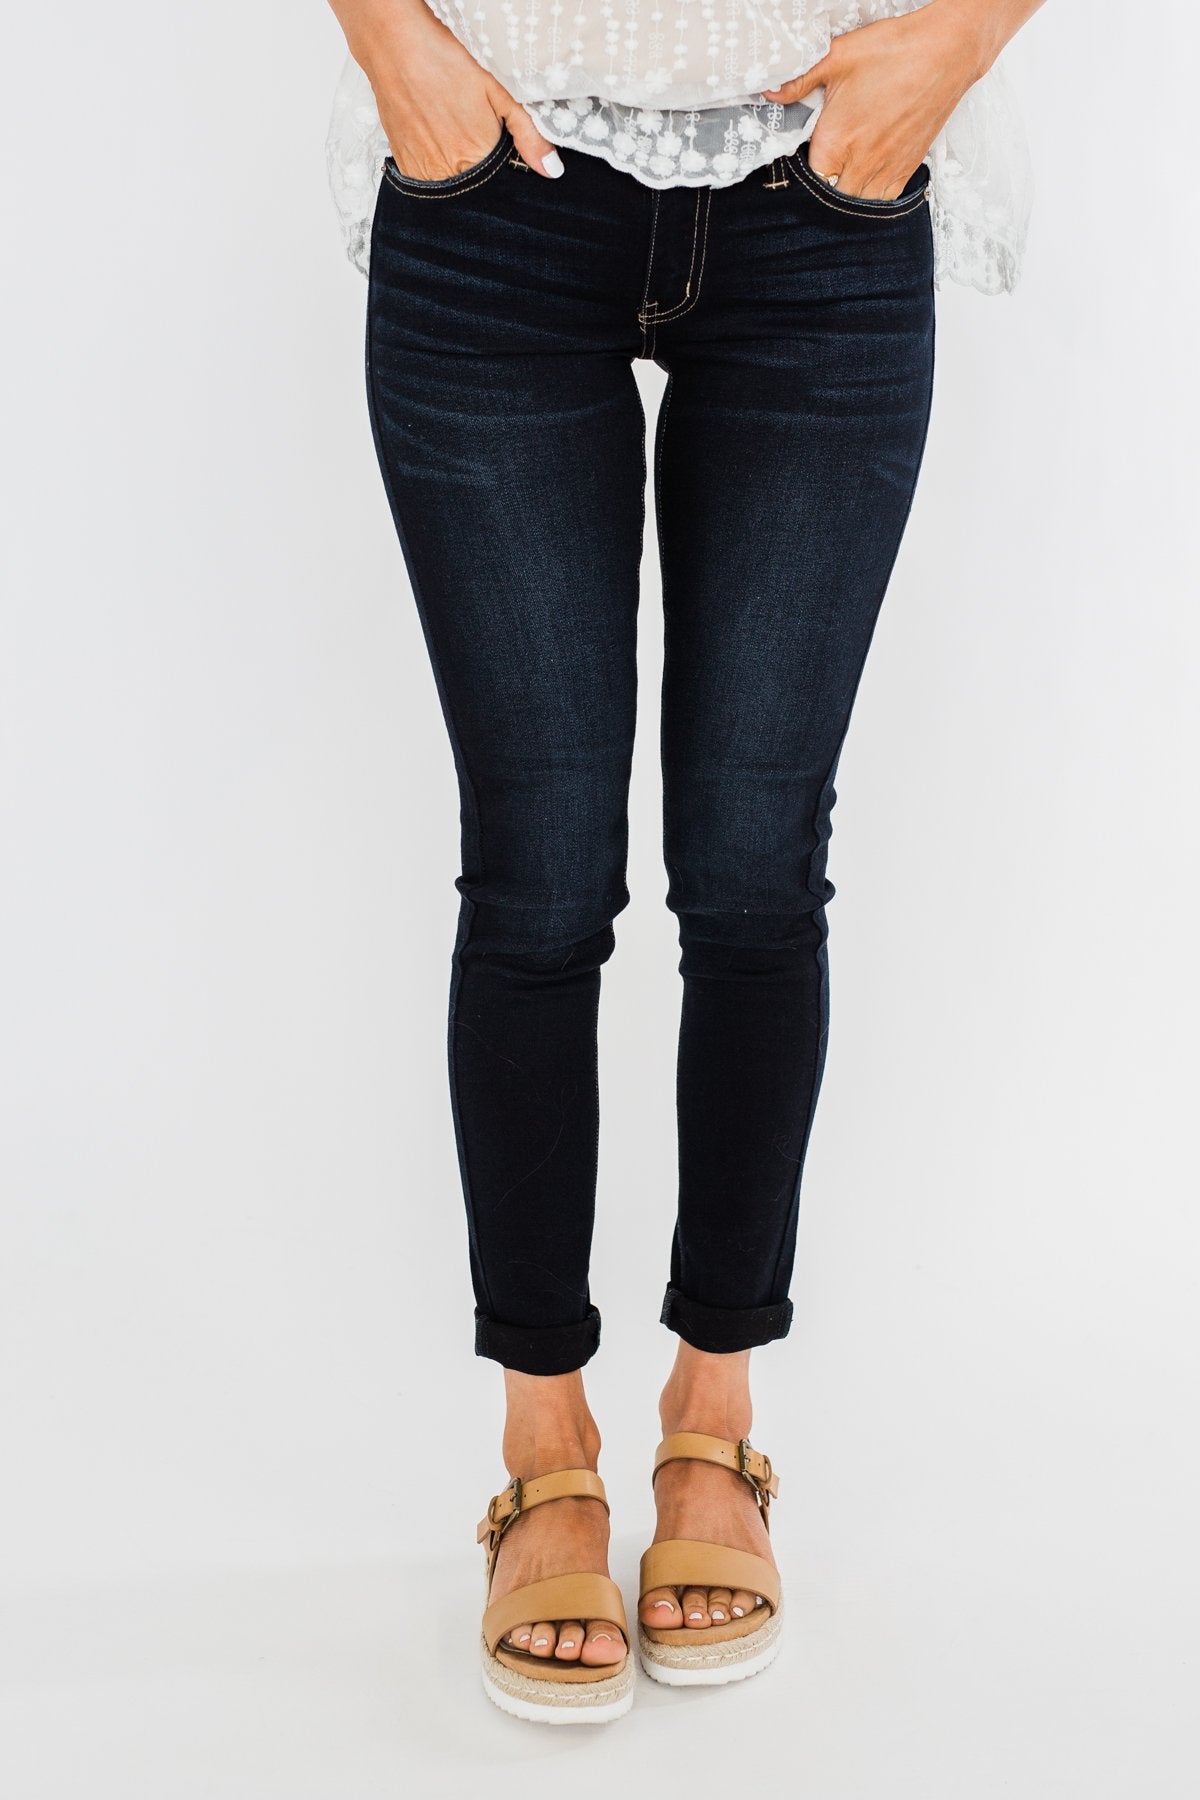 KanCan Skinny Jeans- Joanna Wash